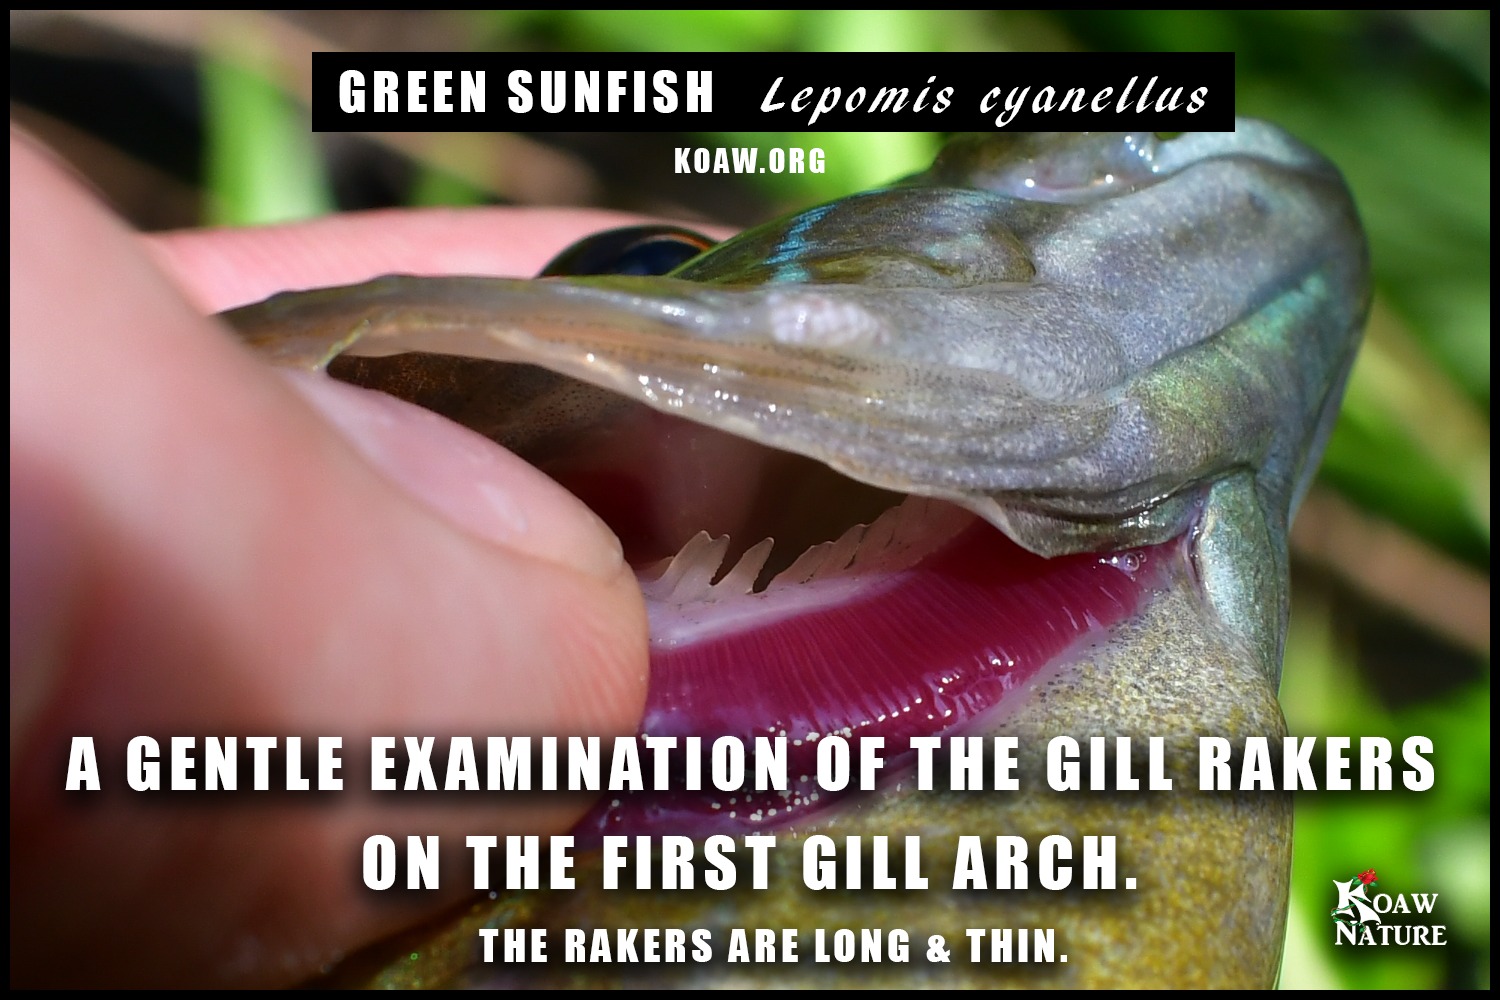 Gill raker examination Green Sunfish Lepomis cyanellus Koaw Nature.png